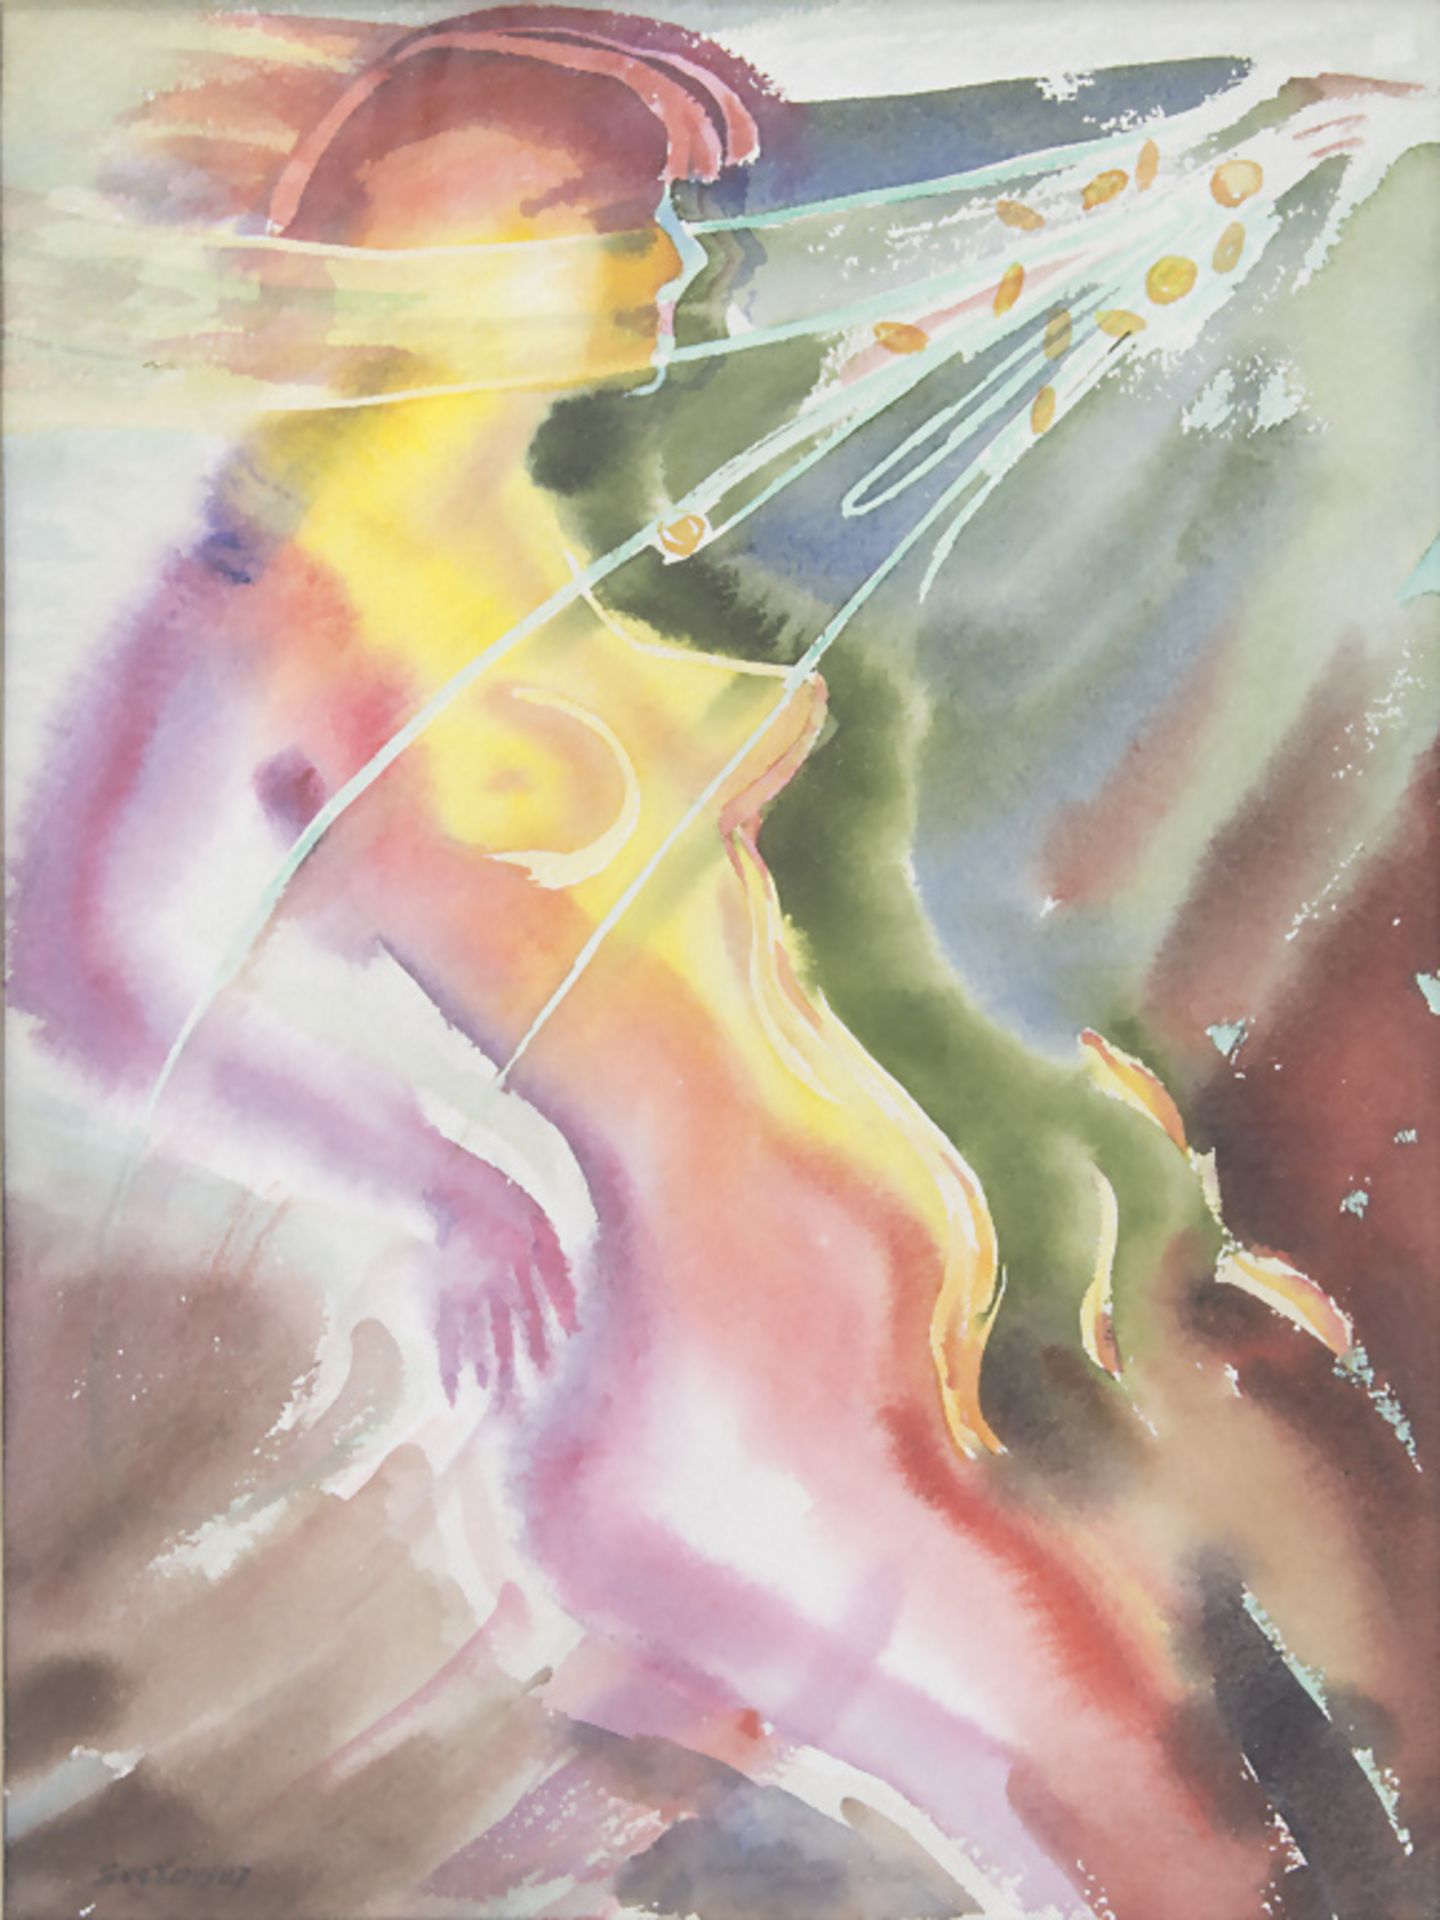 Hardy Schneider-Sato (1919-2002), ' Abstrakter Frauenakt' / 'An abstract female nude', 1987